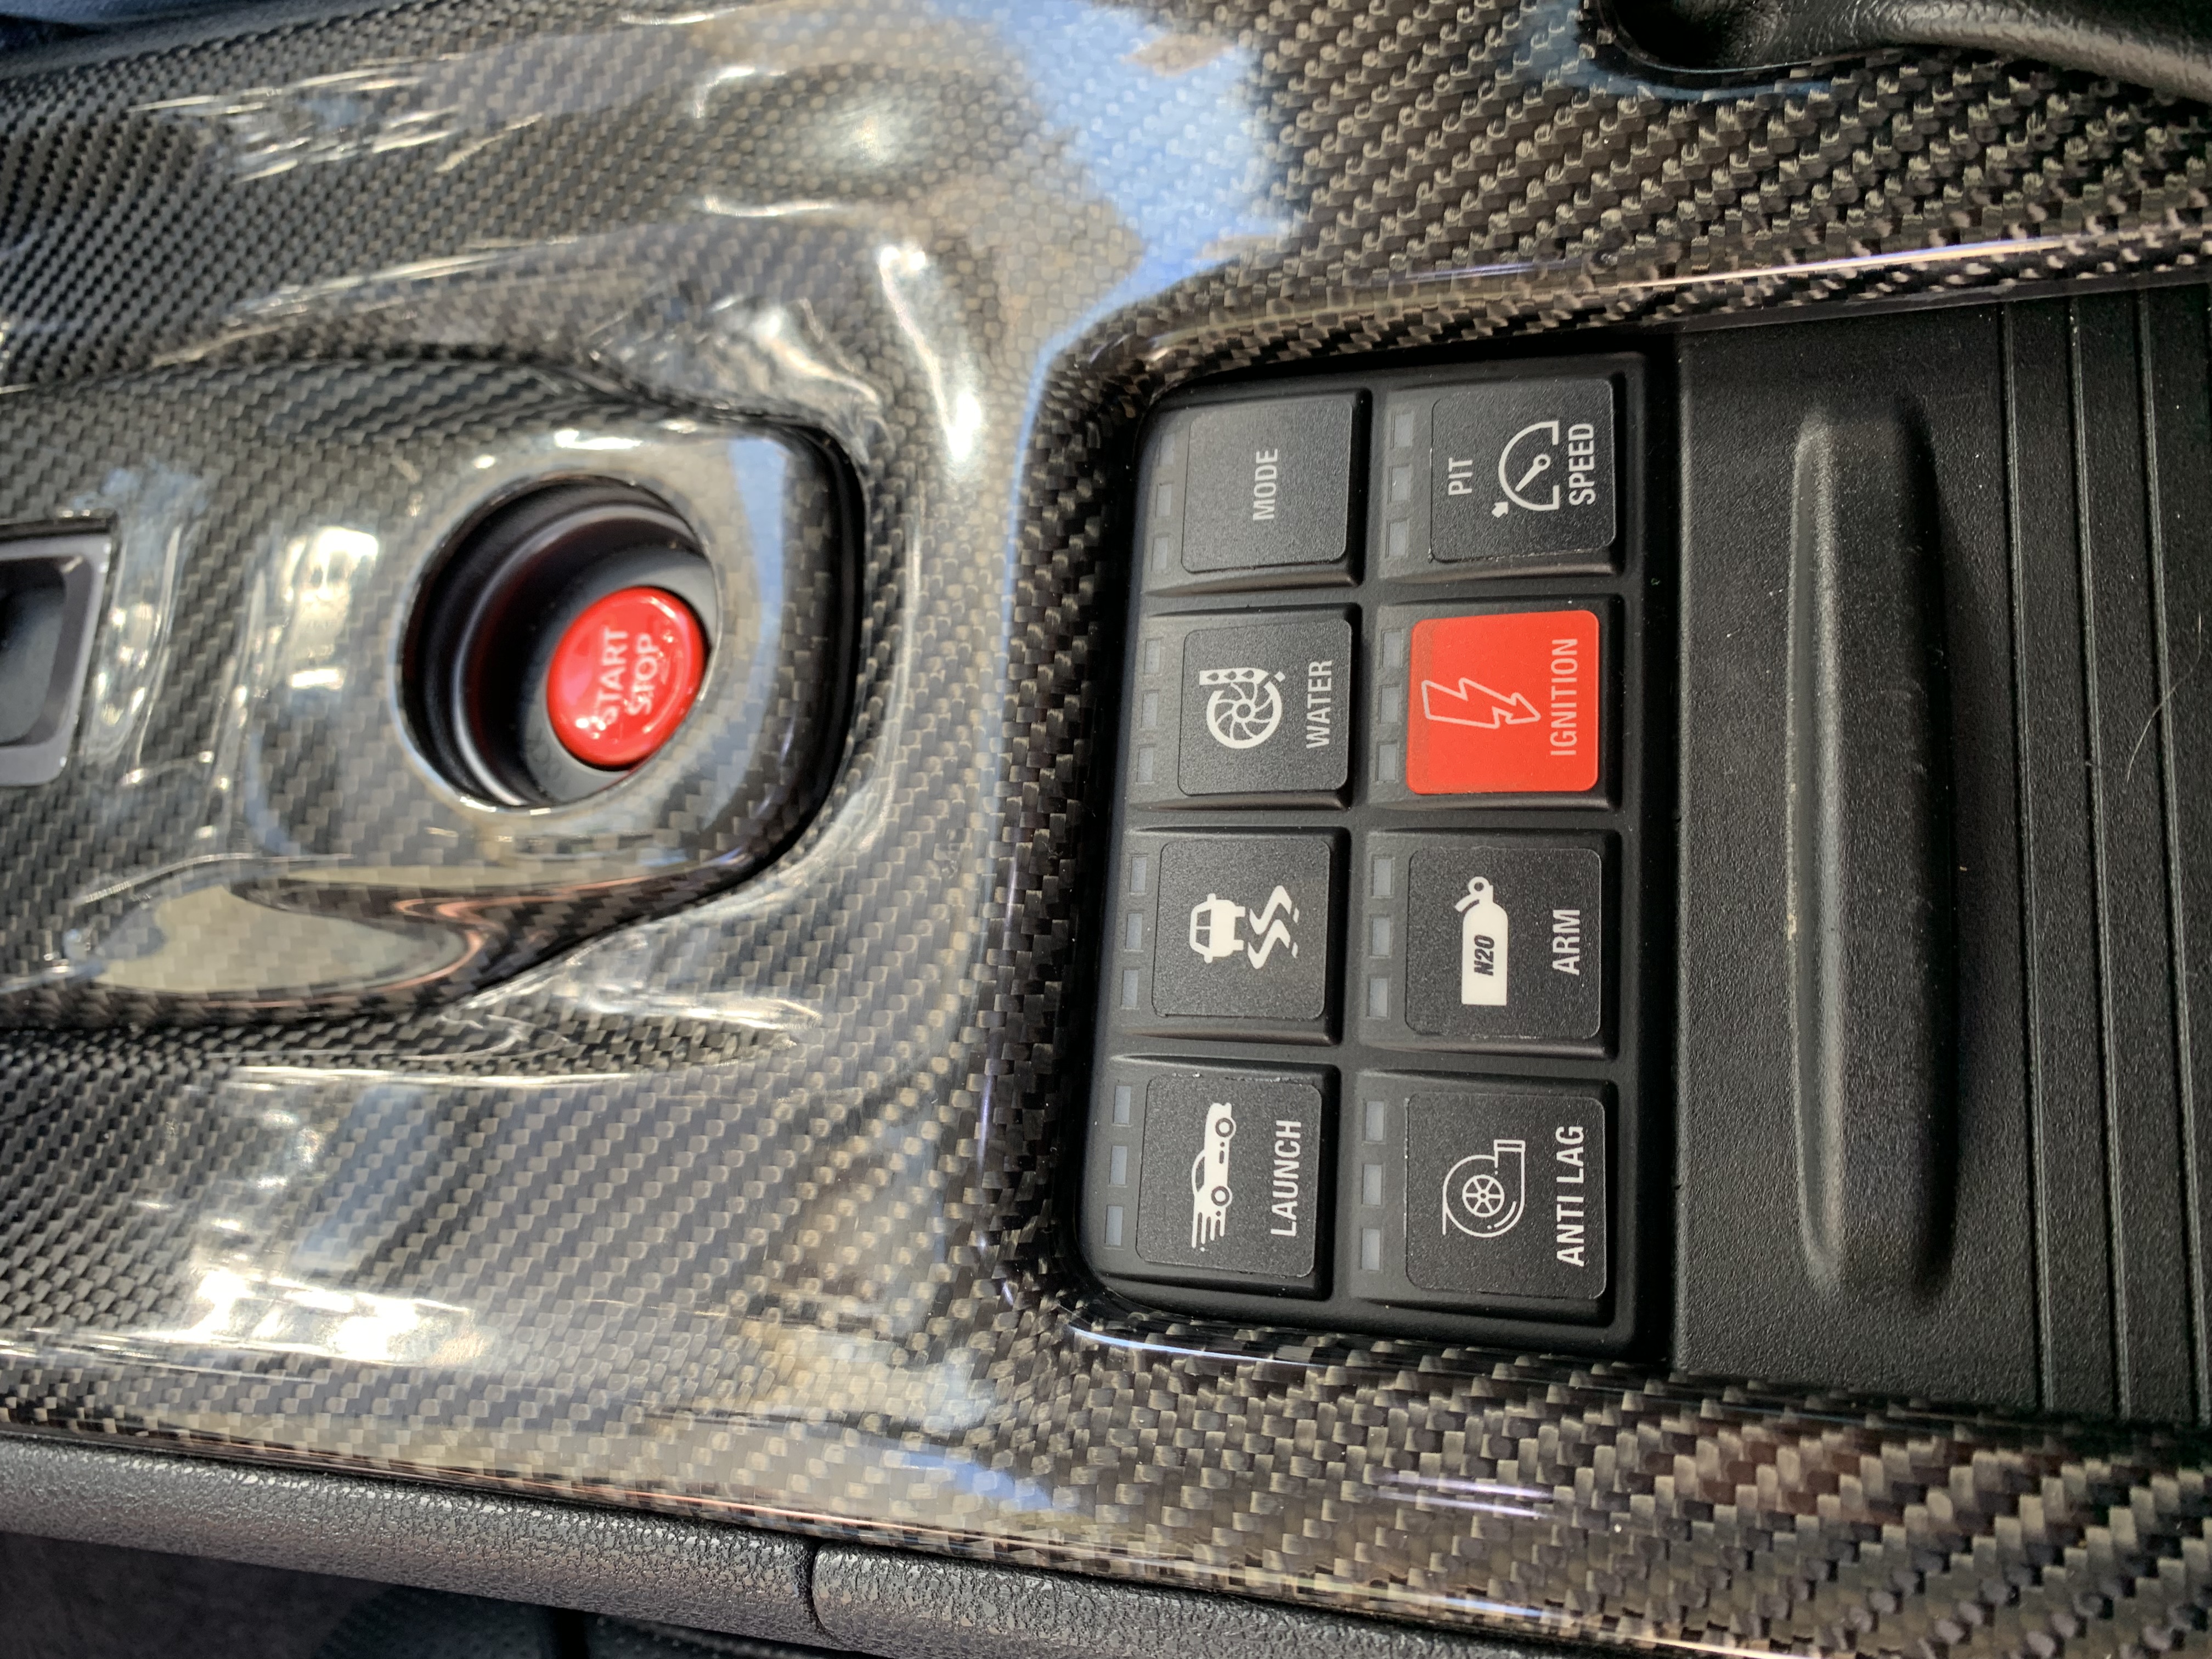 Emtron 8 button CAN keypad